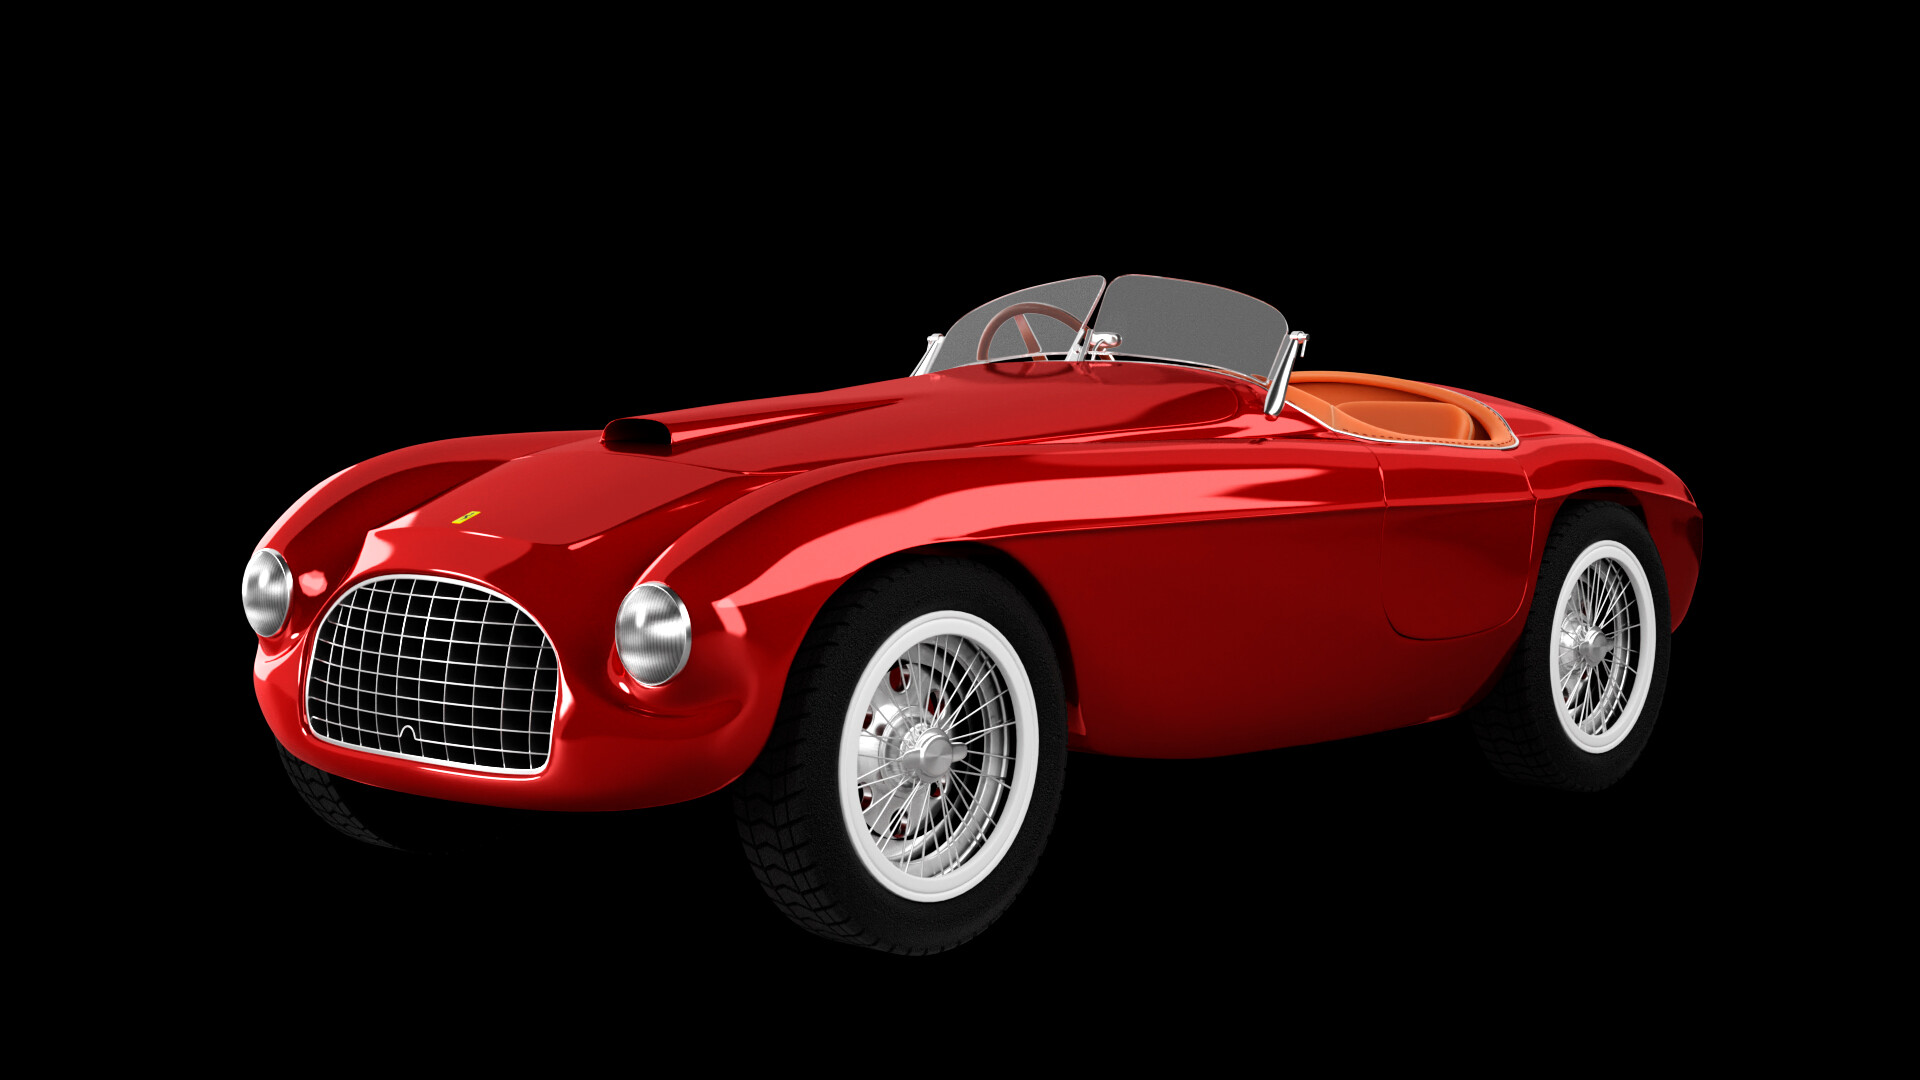 Ferrari 166 MM Barchetta 1949 - Finished Projects - Blender 